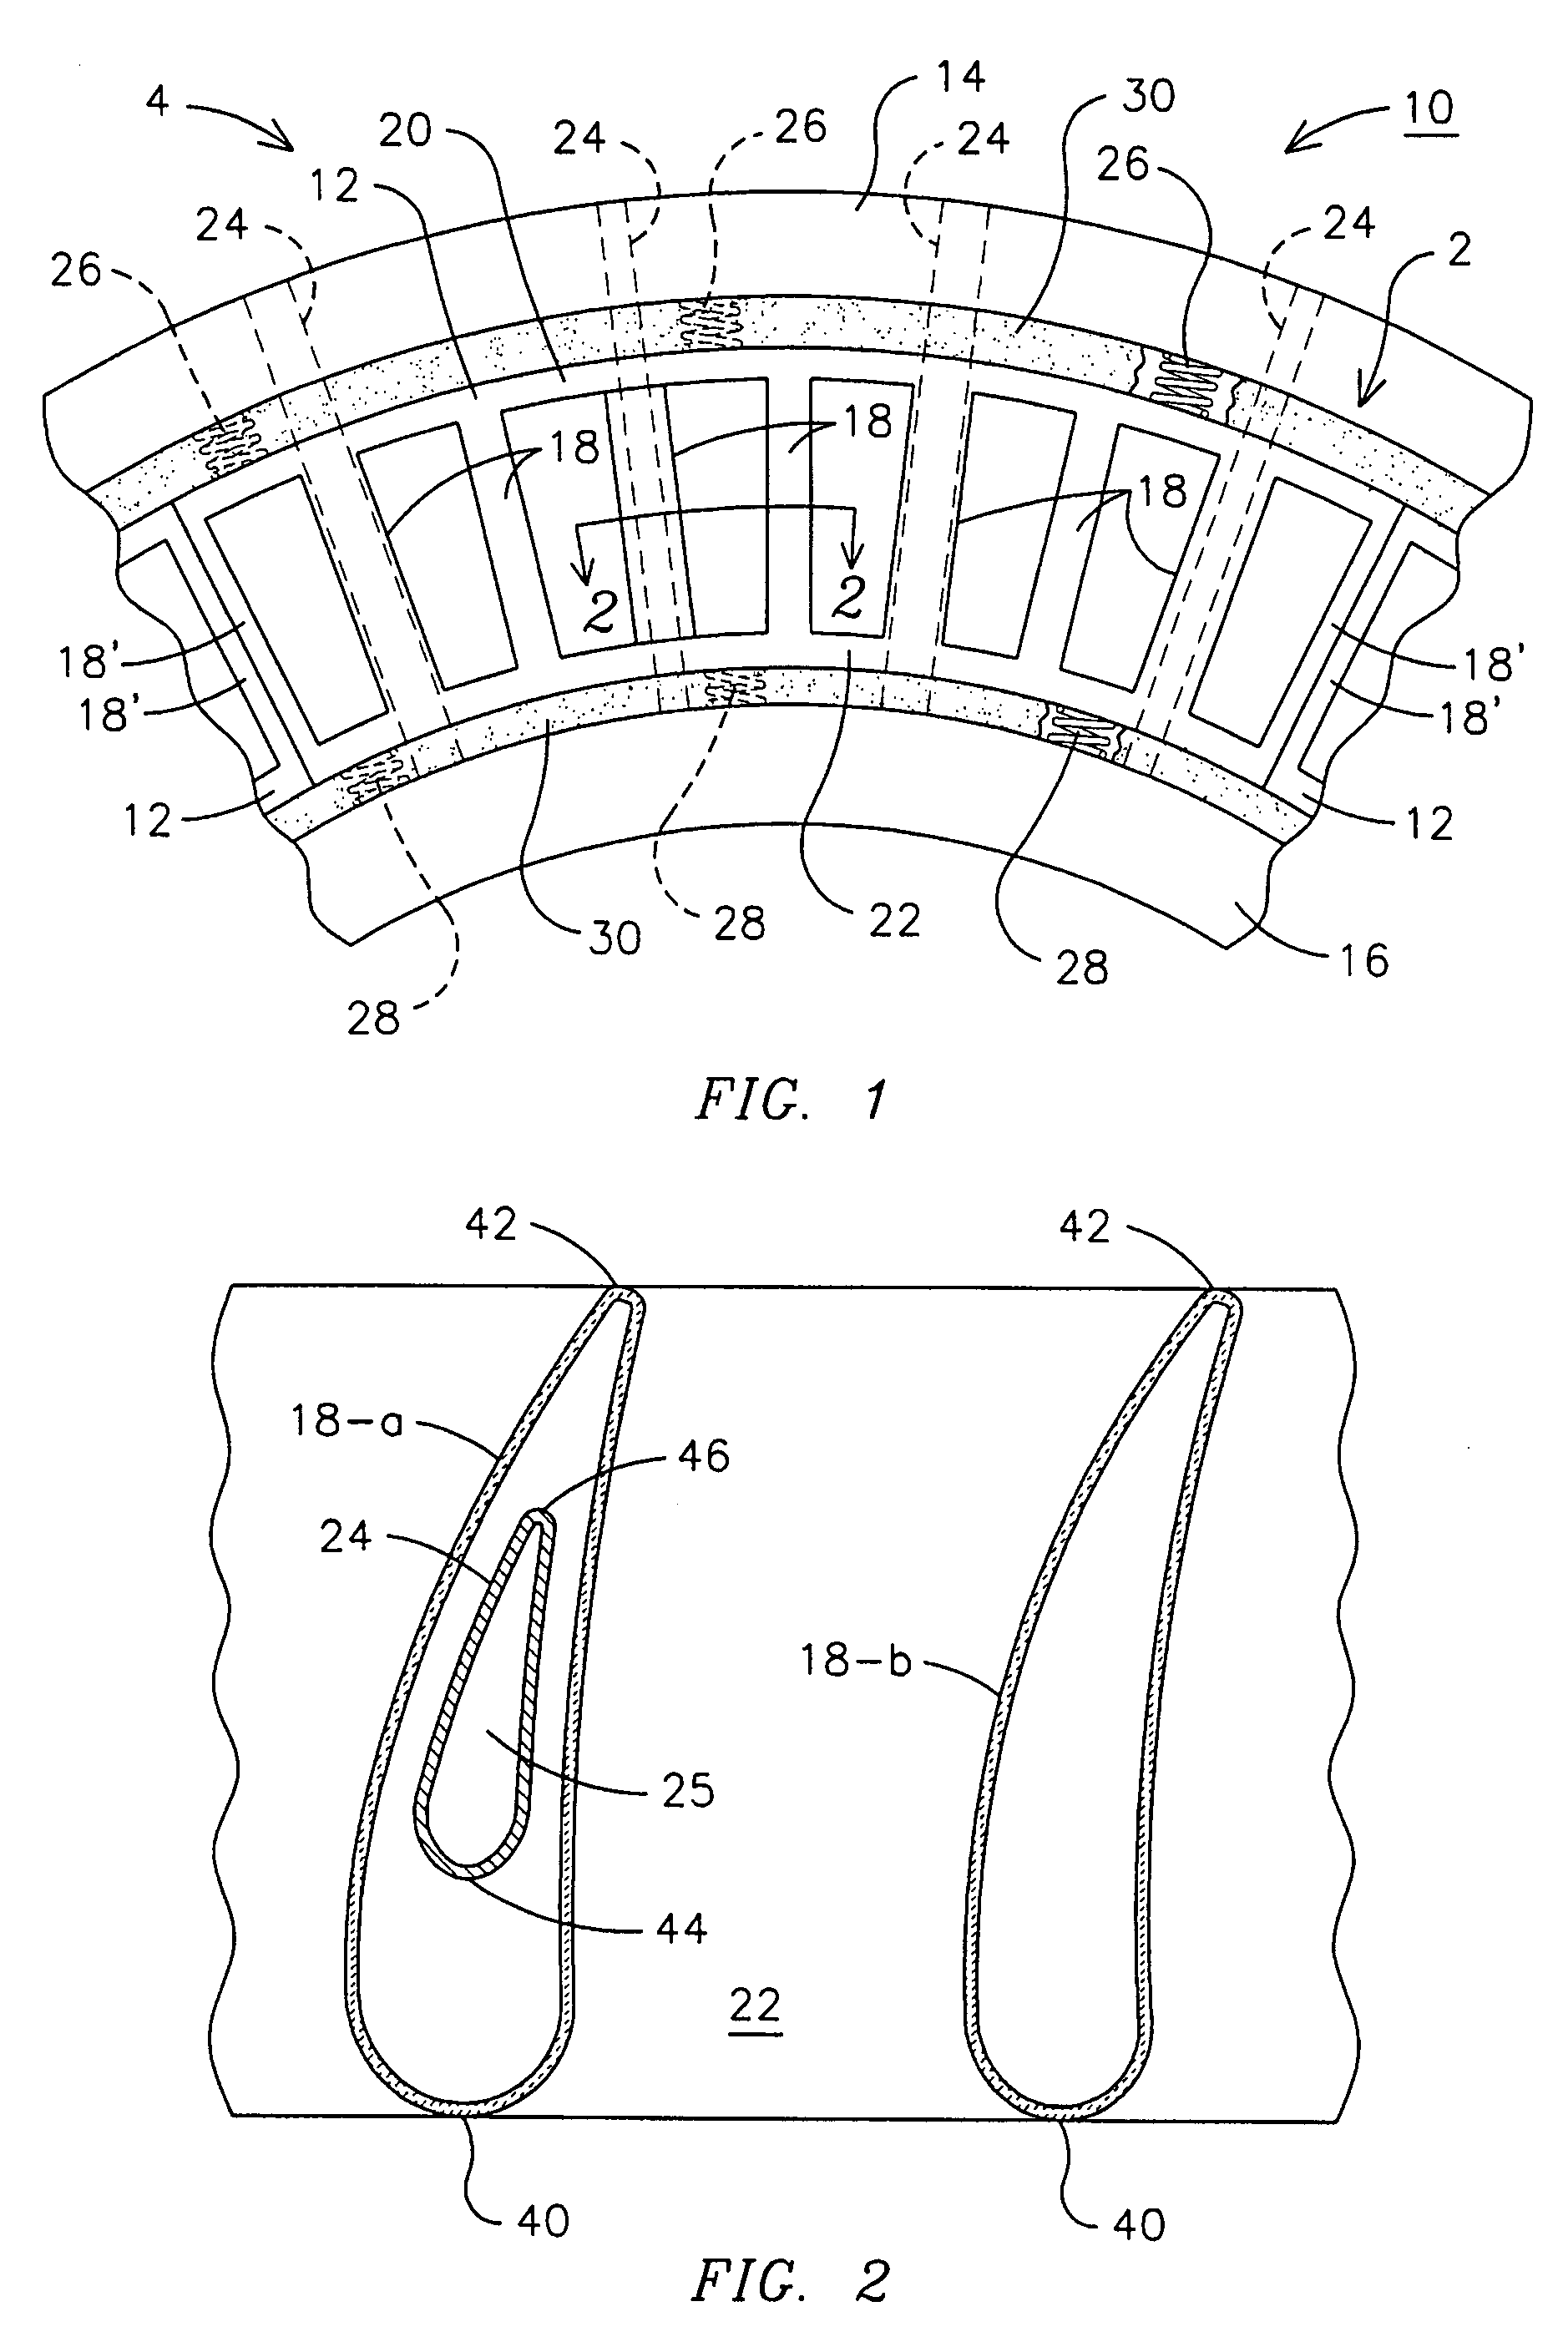 Multivane segment mounting arrangement for a gas turbine